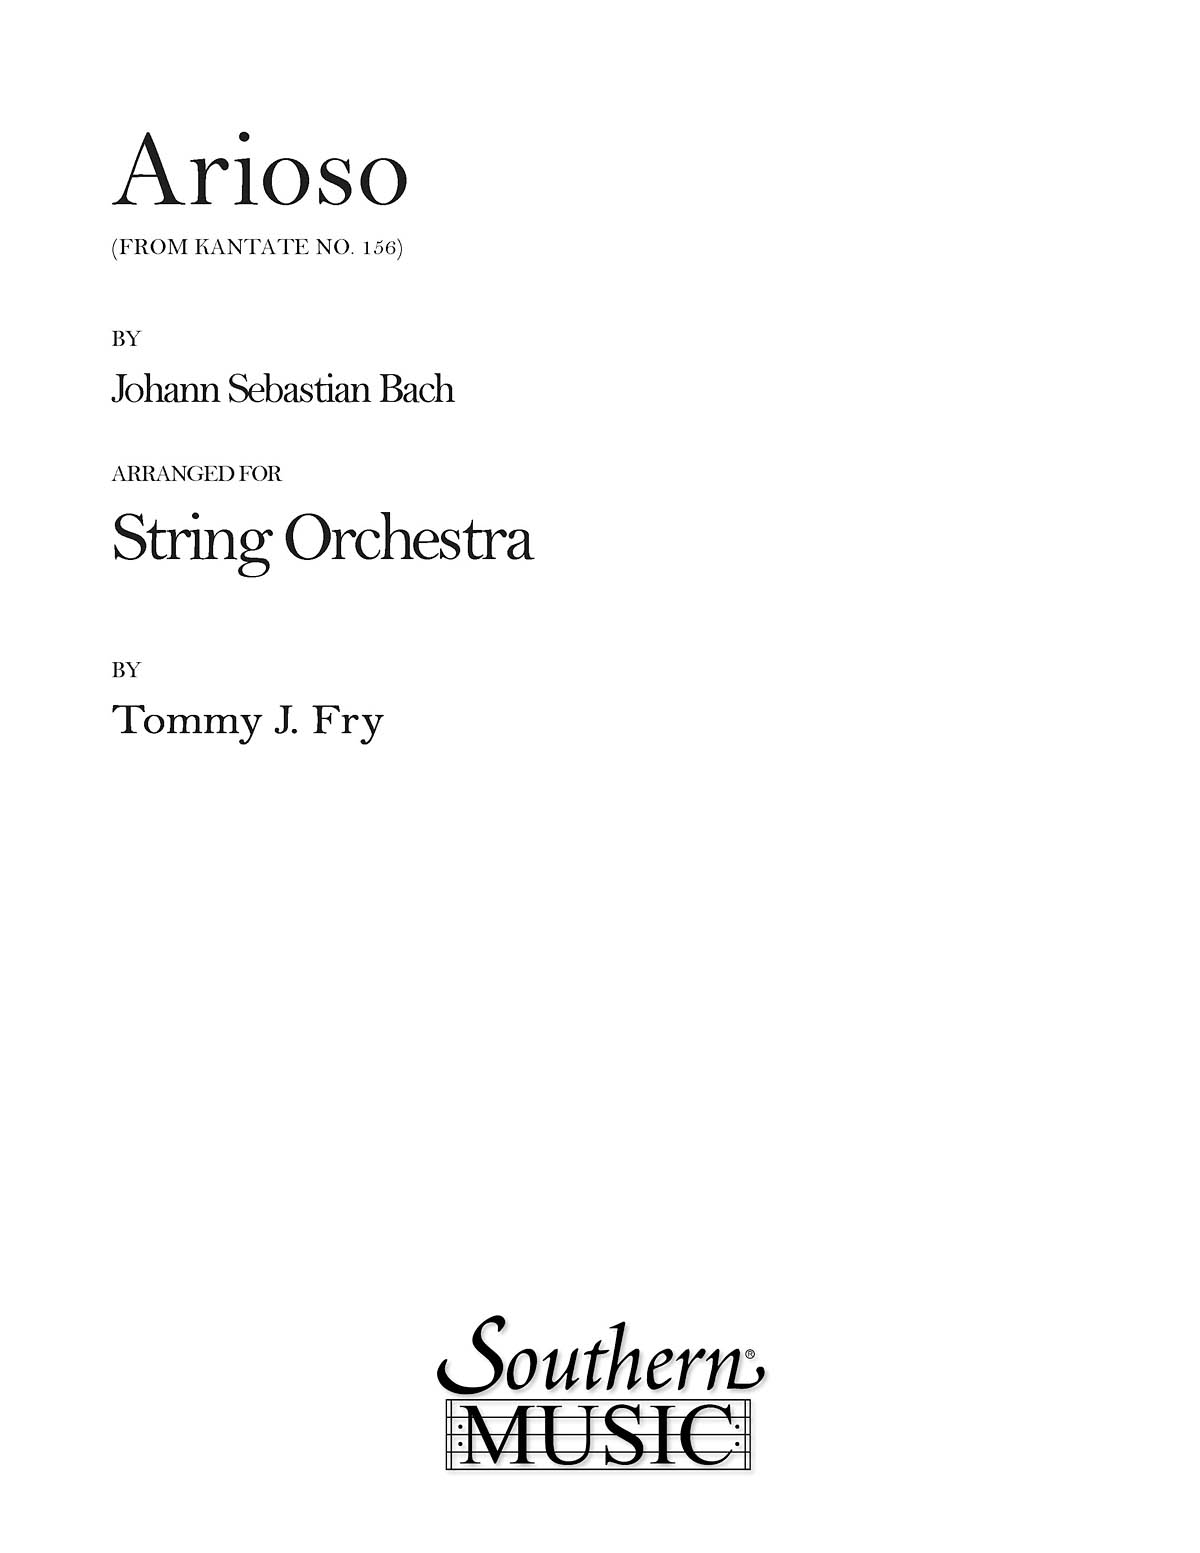 Arioso Cantata 156